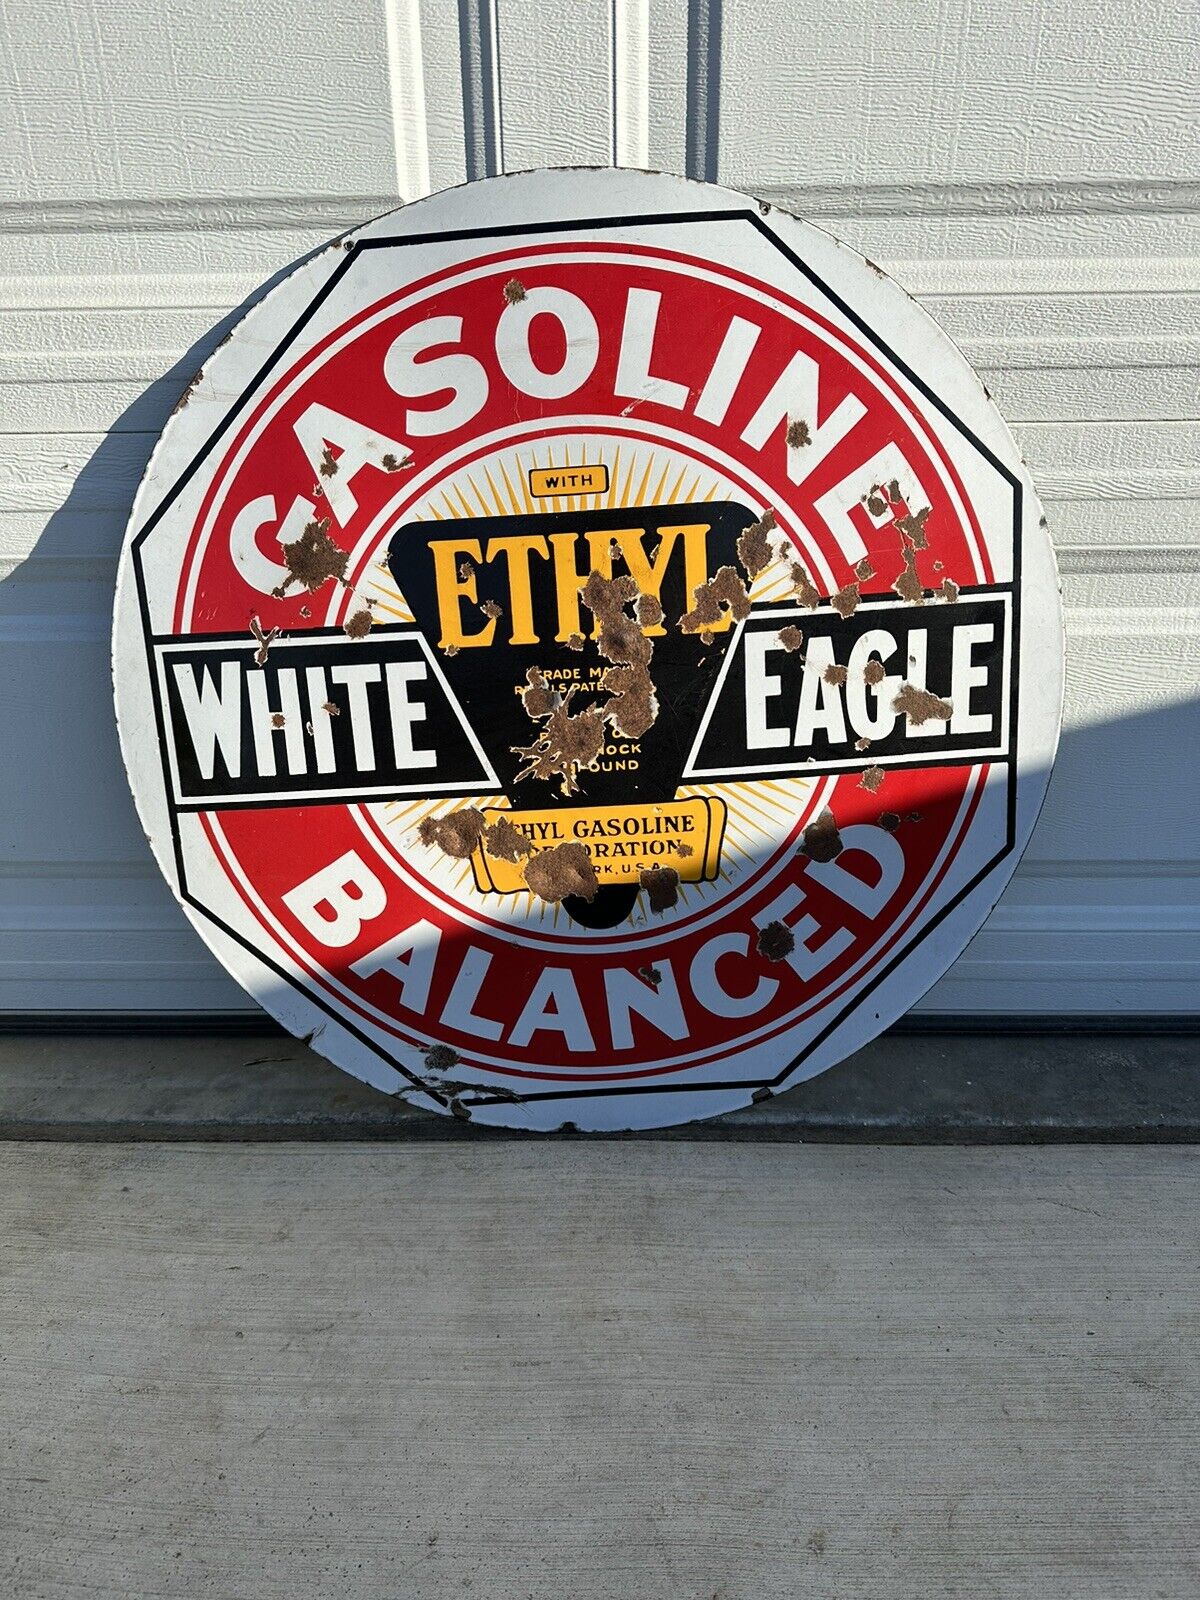 Vintage Double Sided Porcelain White Eagle Gasoline Balanced  With Ethyl Sign.